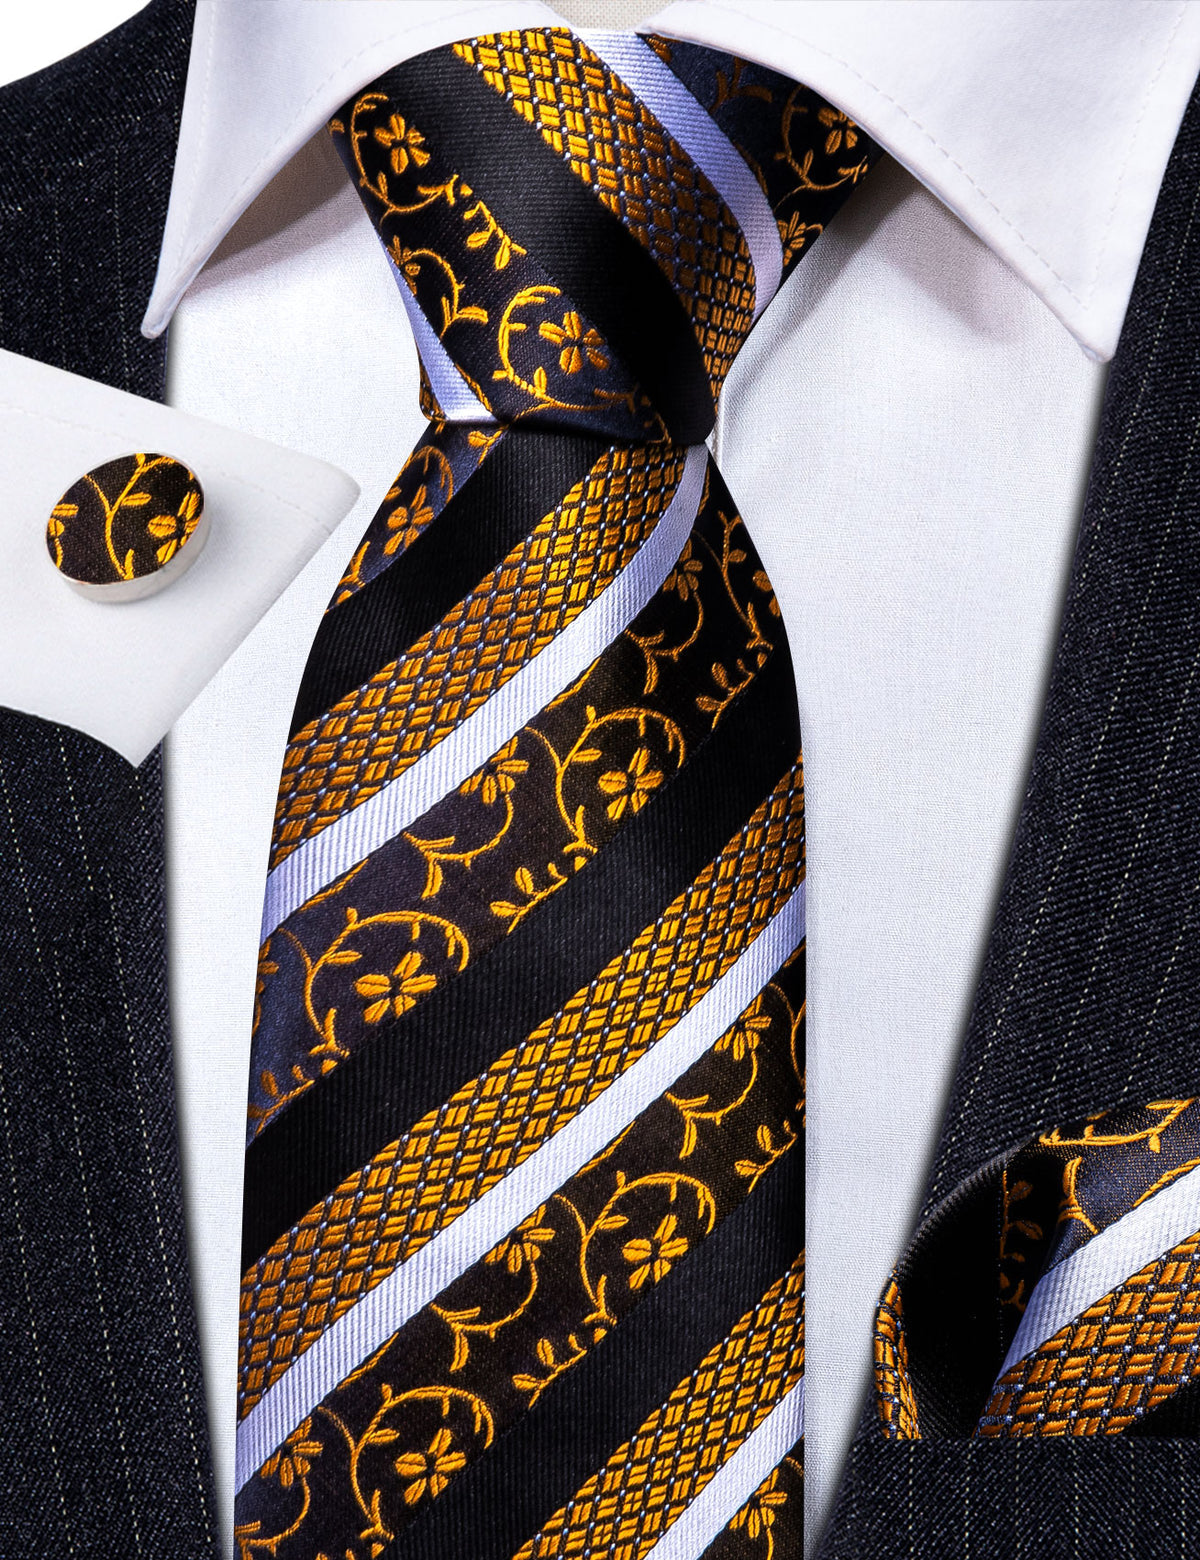 Men’s Silk Coordinated Tie Set - Black Gold Striped Paisley (6313)